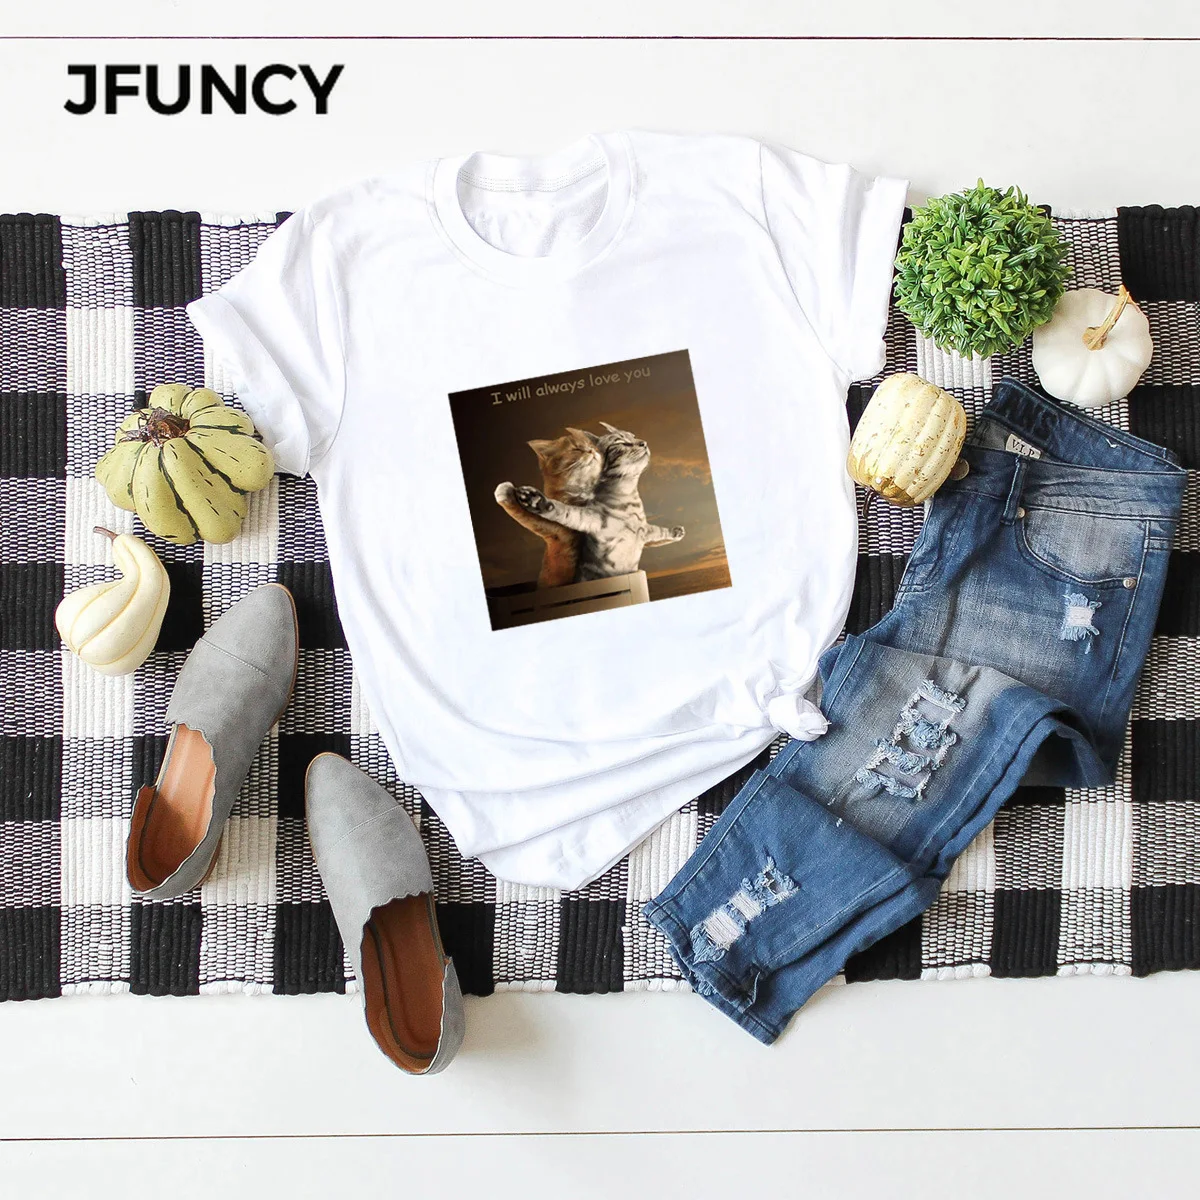 JFUNCY Funny Cats Print 100%Cotton Summer T Shirt Women Short Sleeve T-shirt Female Tees  Casual Lady Basic Tops